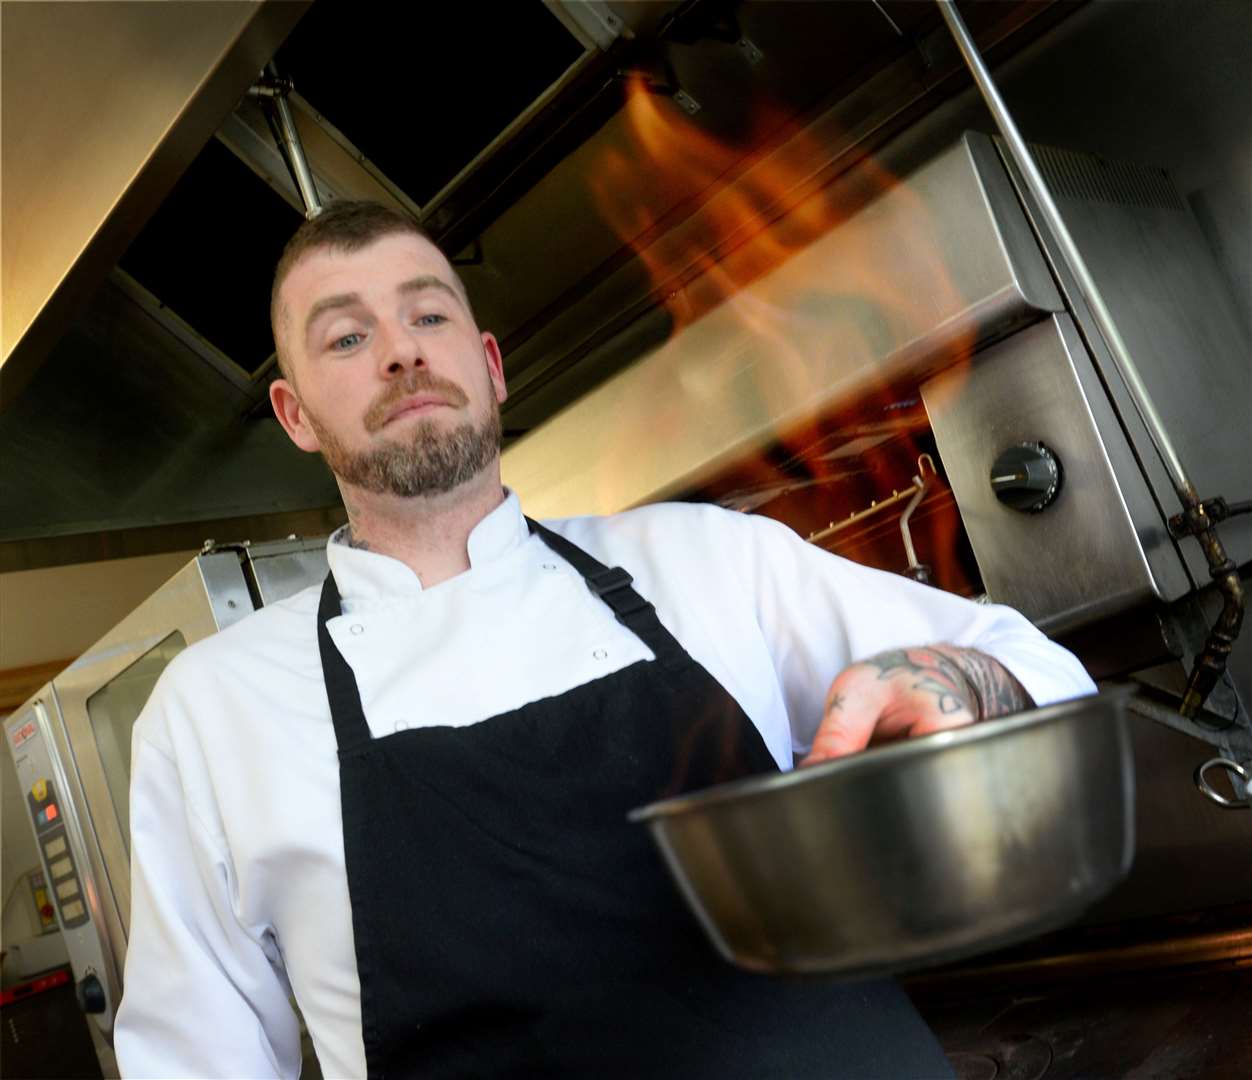 New head chef at Drumossie Hotel, David MacDonald. Picture: Gary Anthony